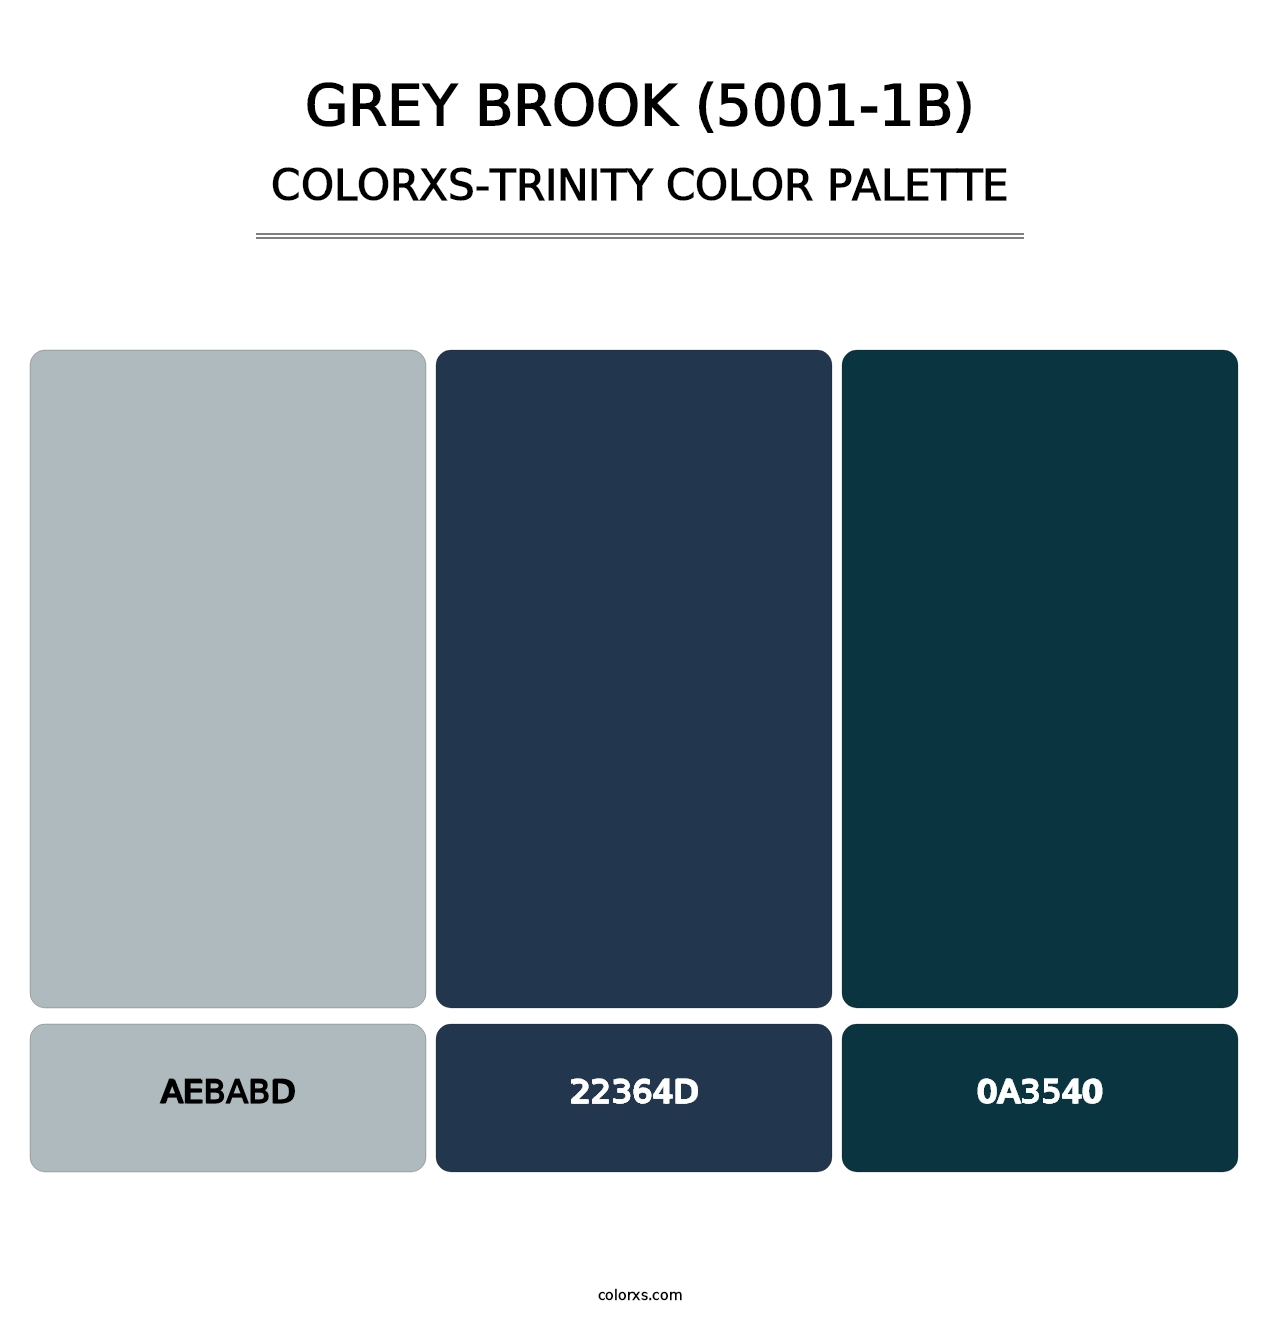 Grey Brook (5001-1B) - Colorxs Trinity Palette